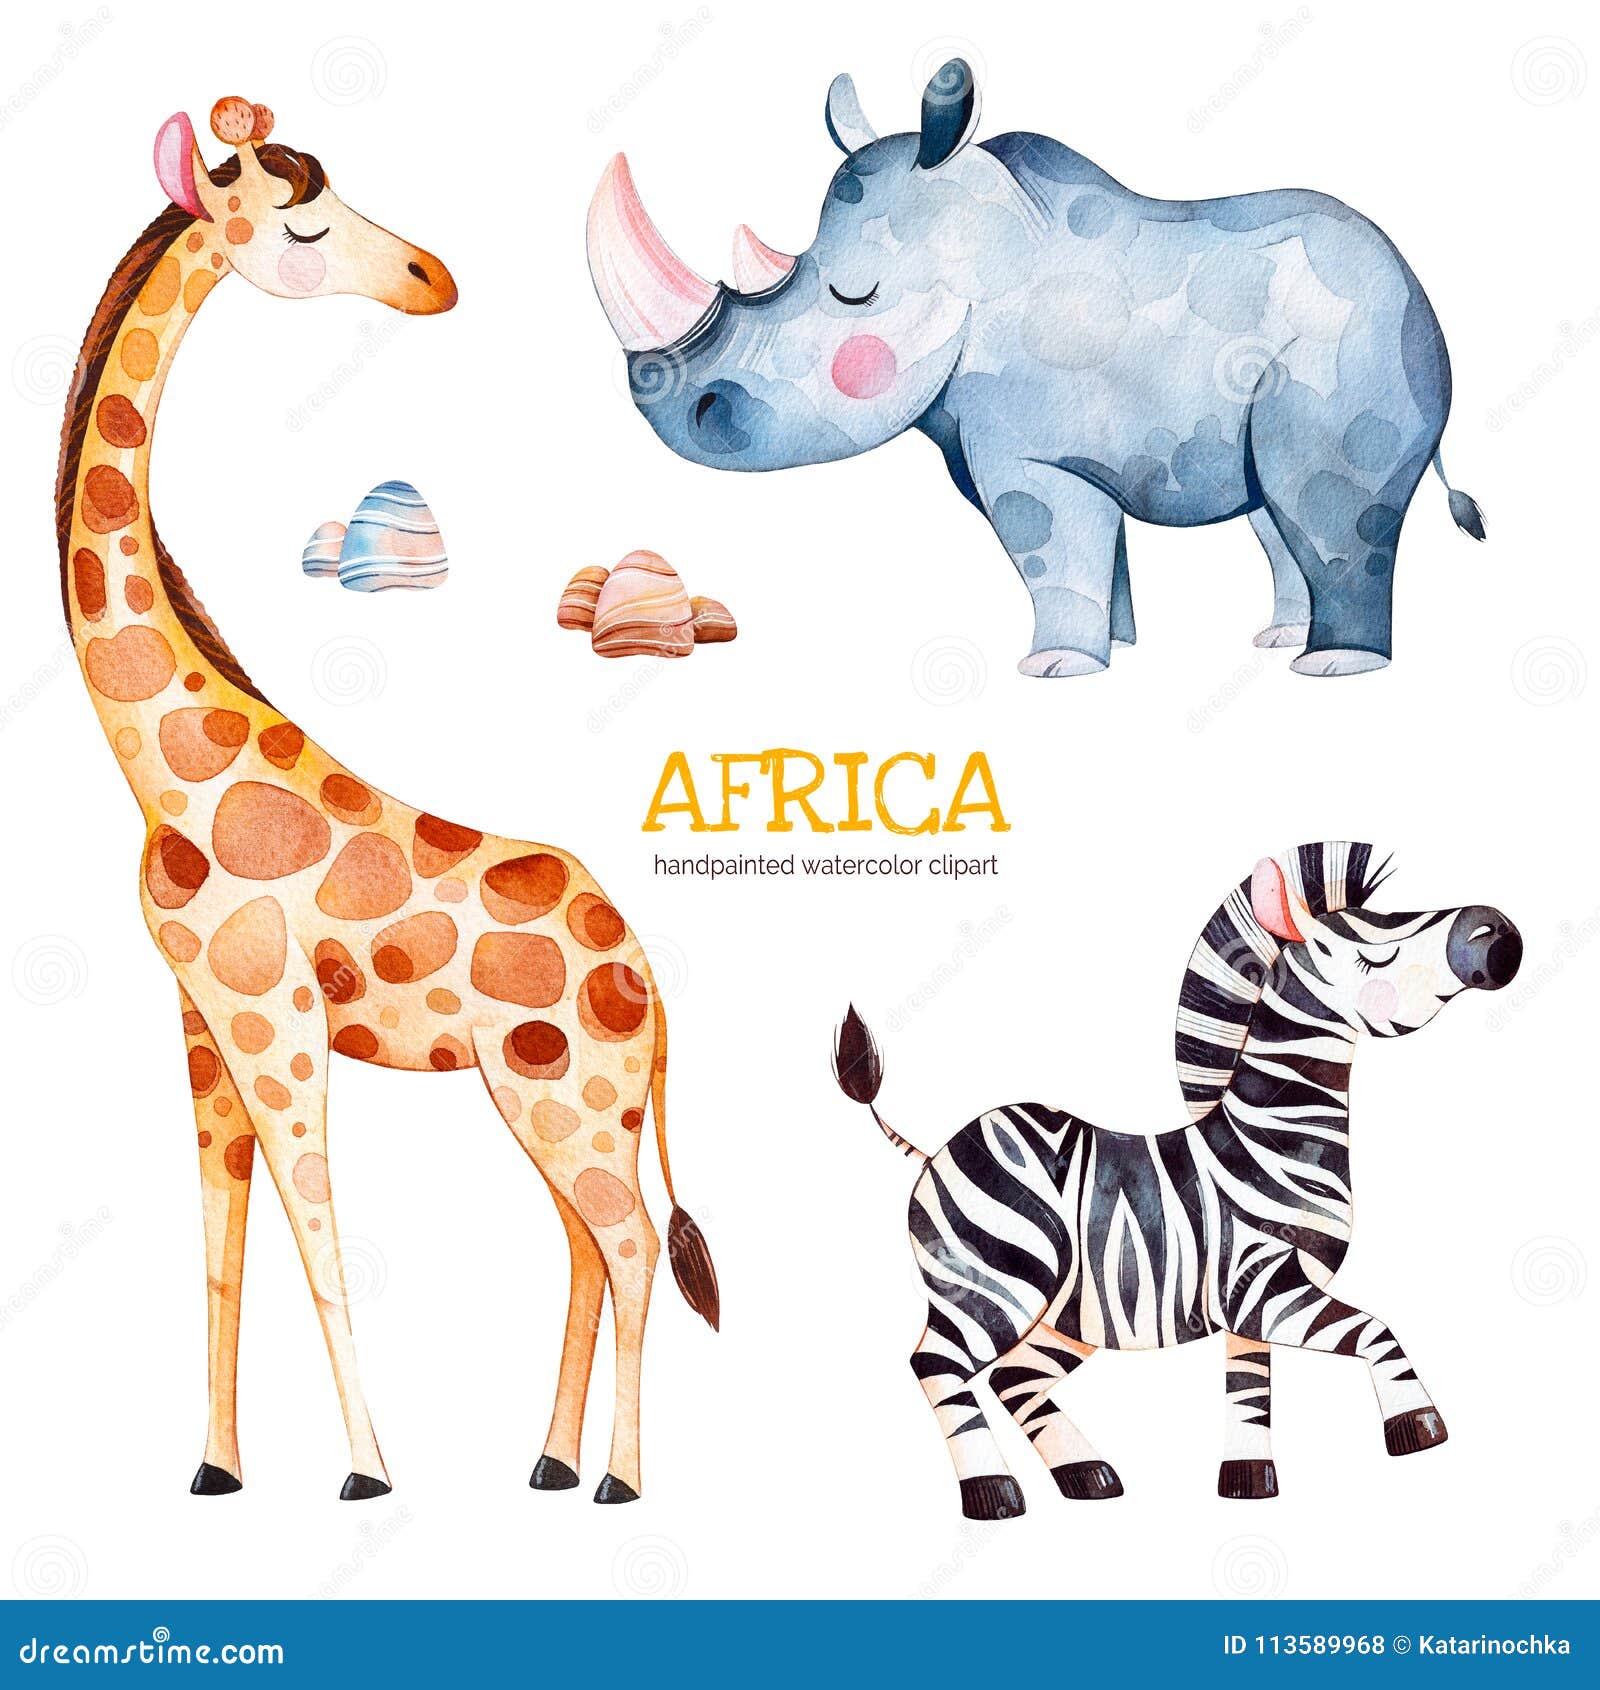 safari collection with giraffe, rhino, zebra, stones